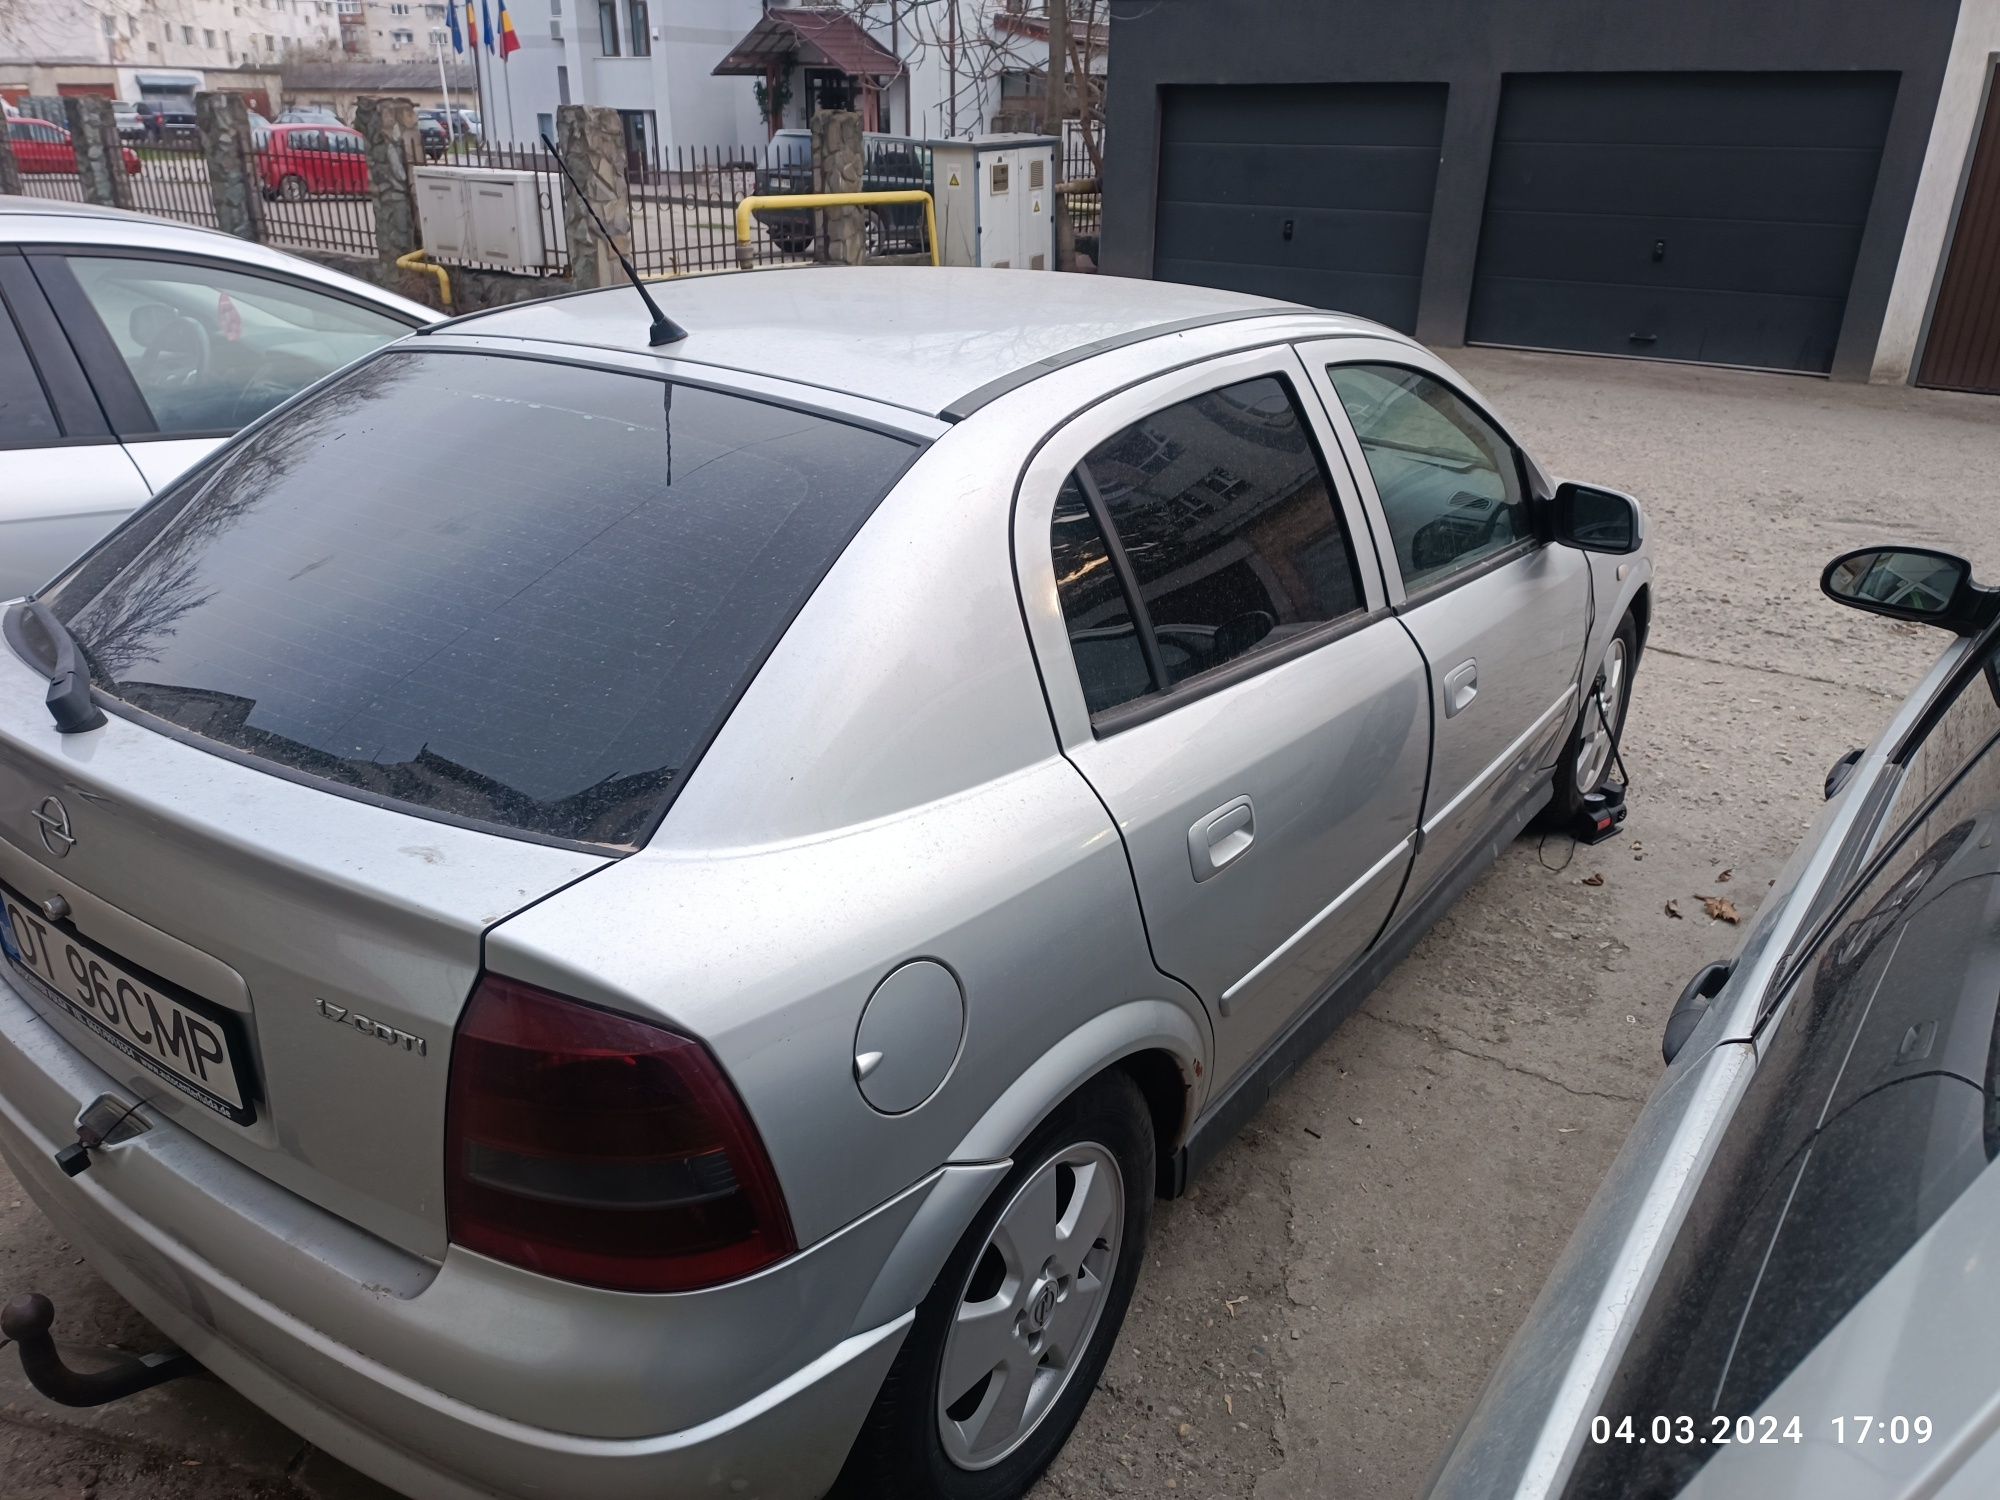 Opel Astra G Njoy 2004 1.7 cdti